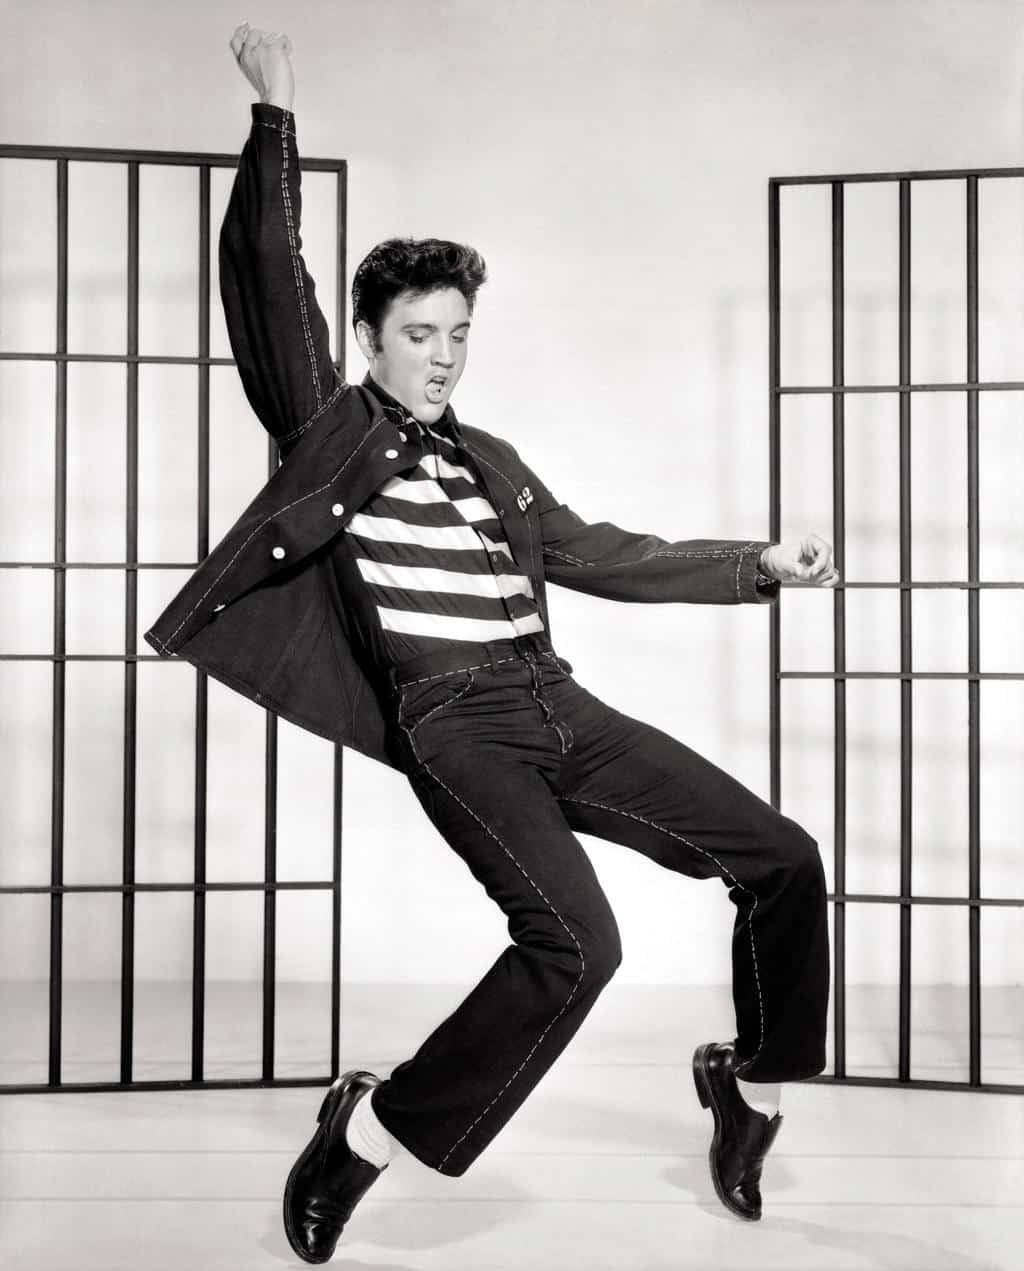 Elvis Presley in iconic pose